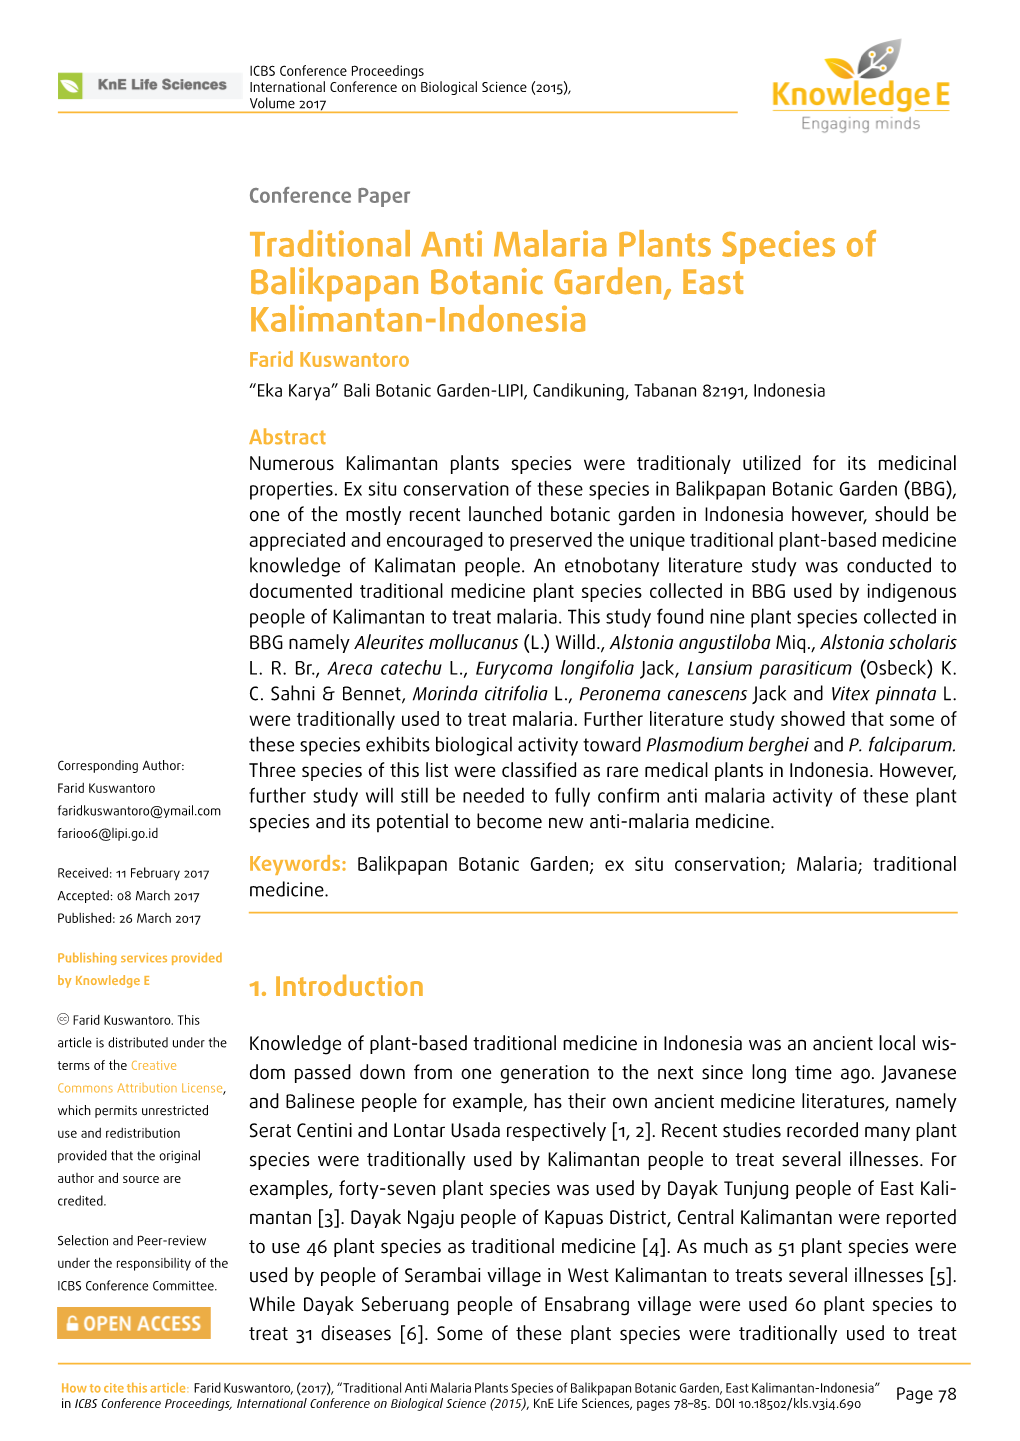 Traditional Anti Malaria Plants Species of Balikpapan Botanic